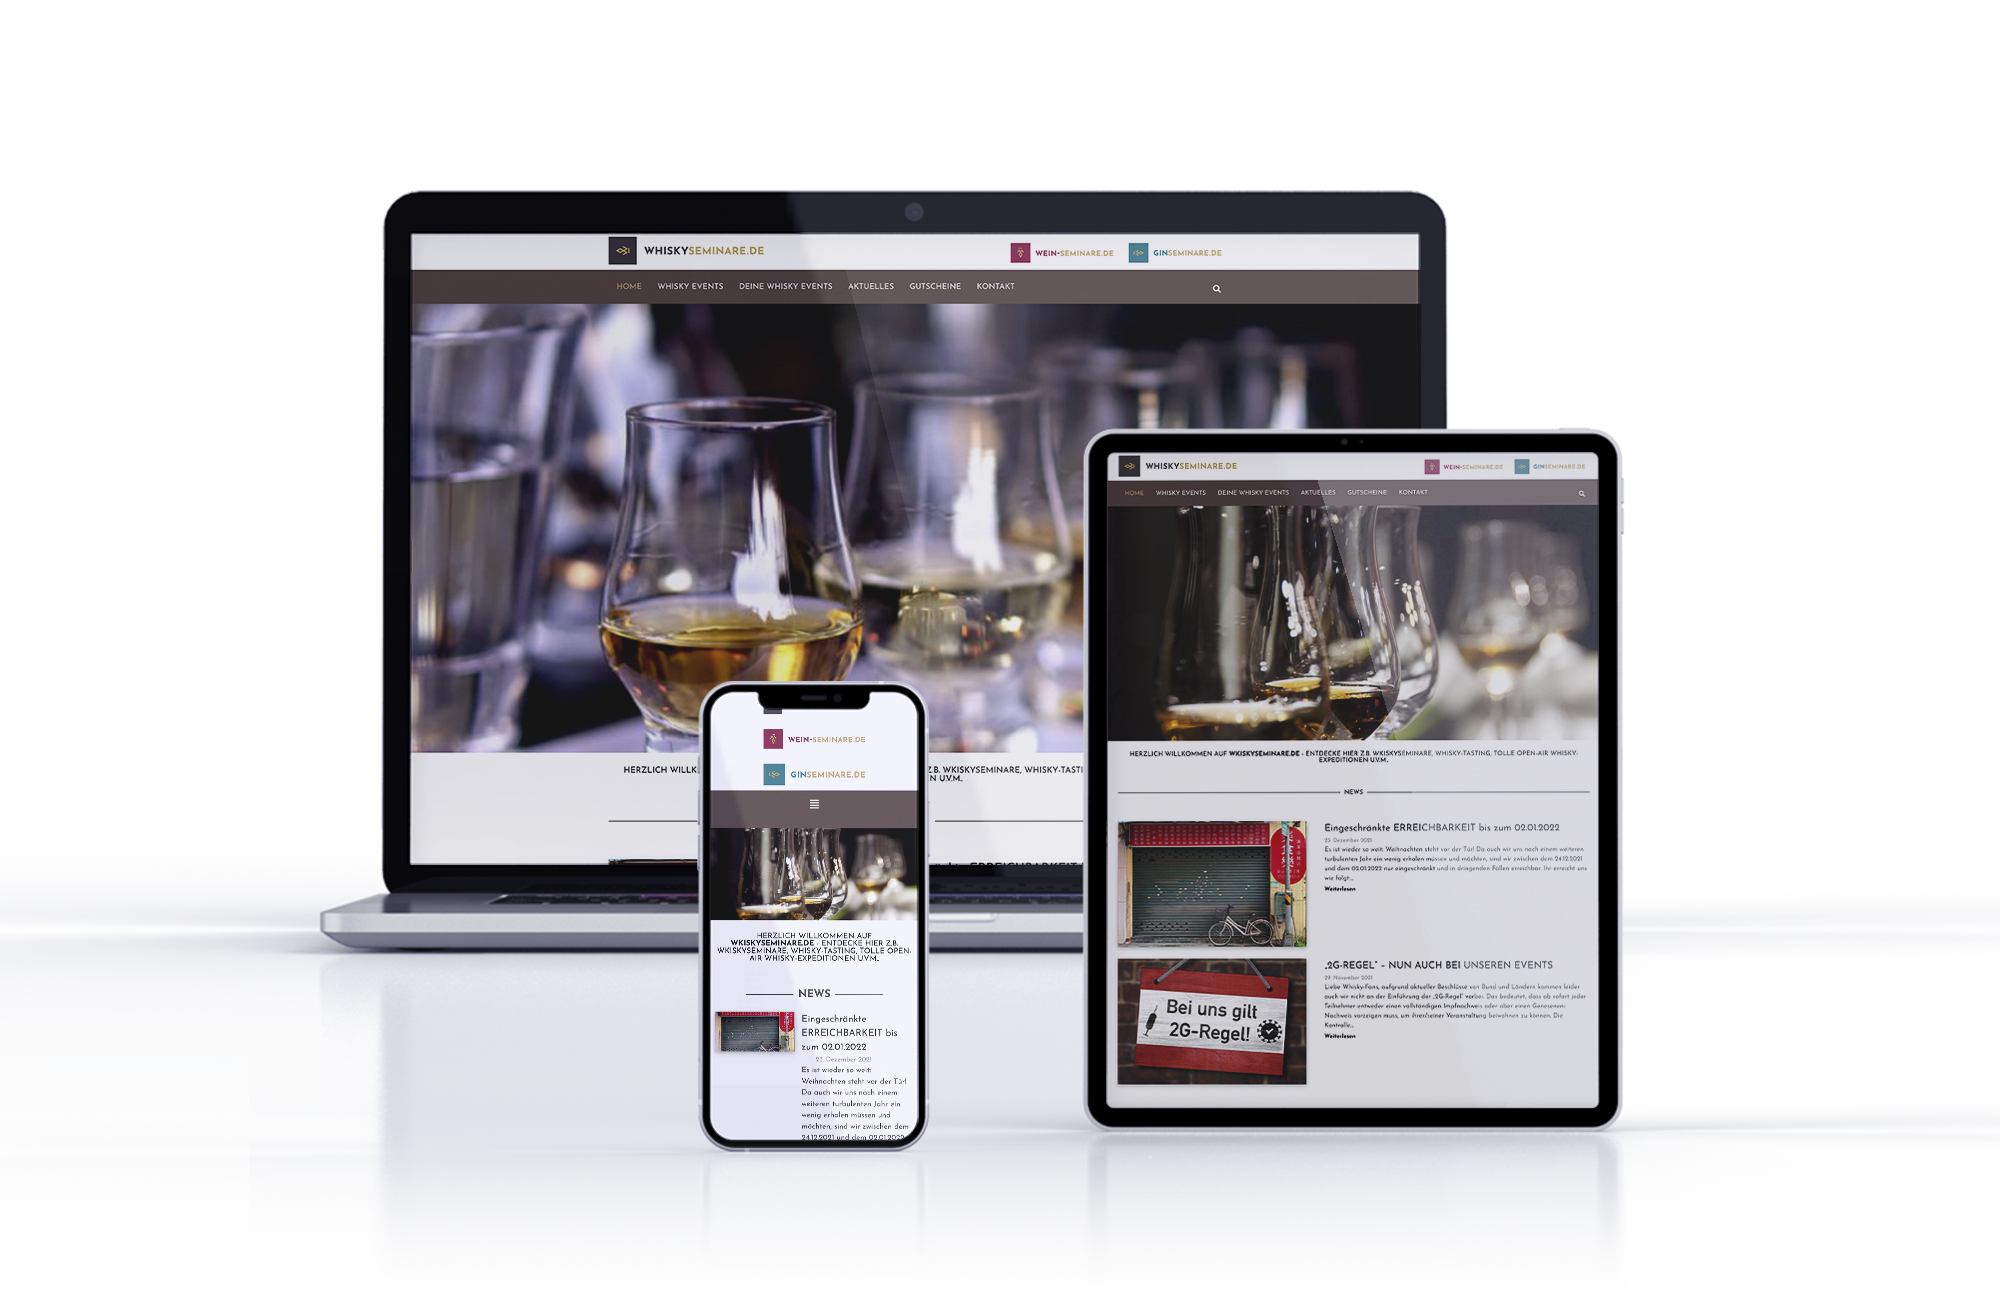 webdesign referenz arbeit whisky ginseminare.de bernig marketing